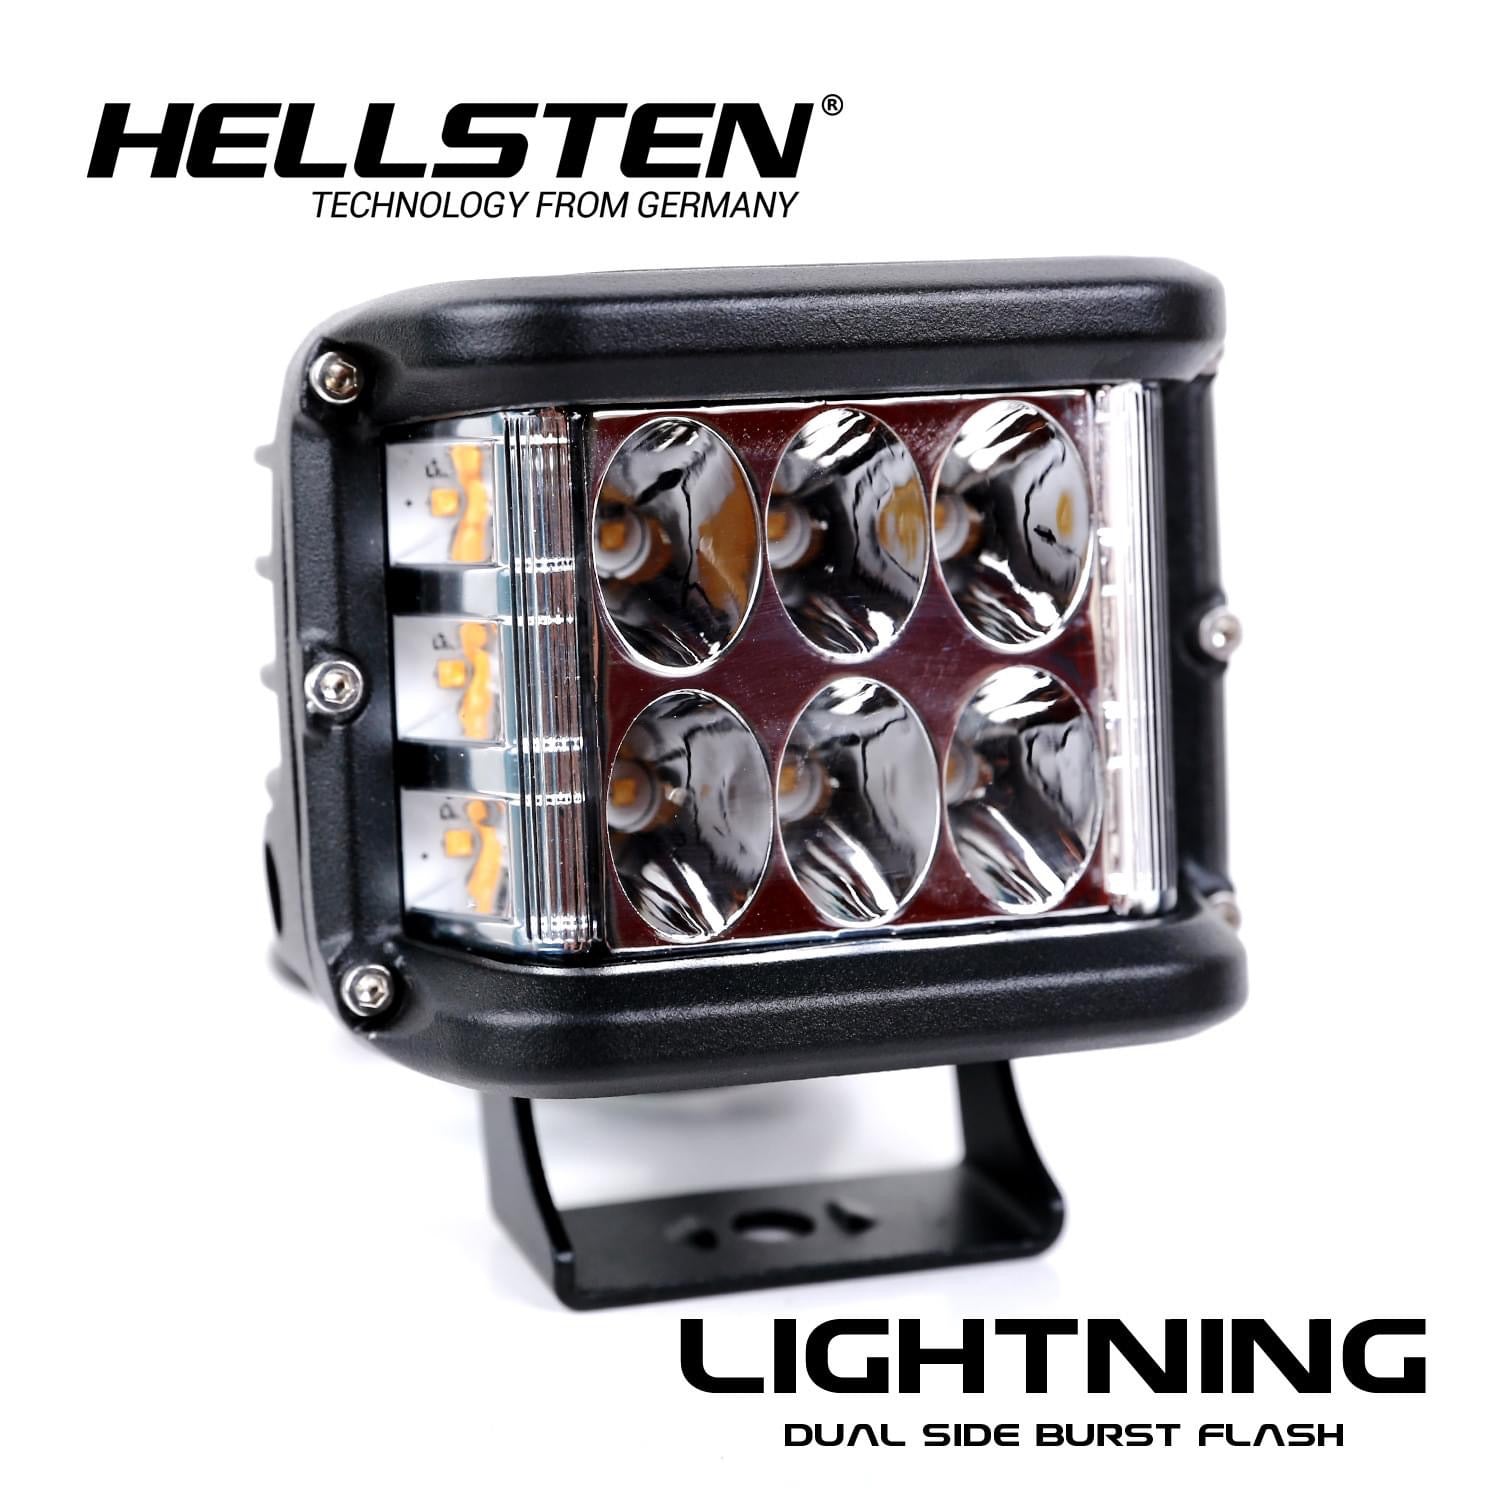 Hellsten Lightning SERIES - Hellsten LED Philippines